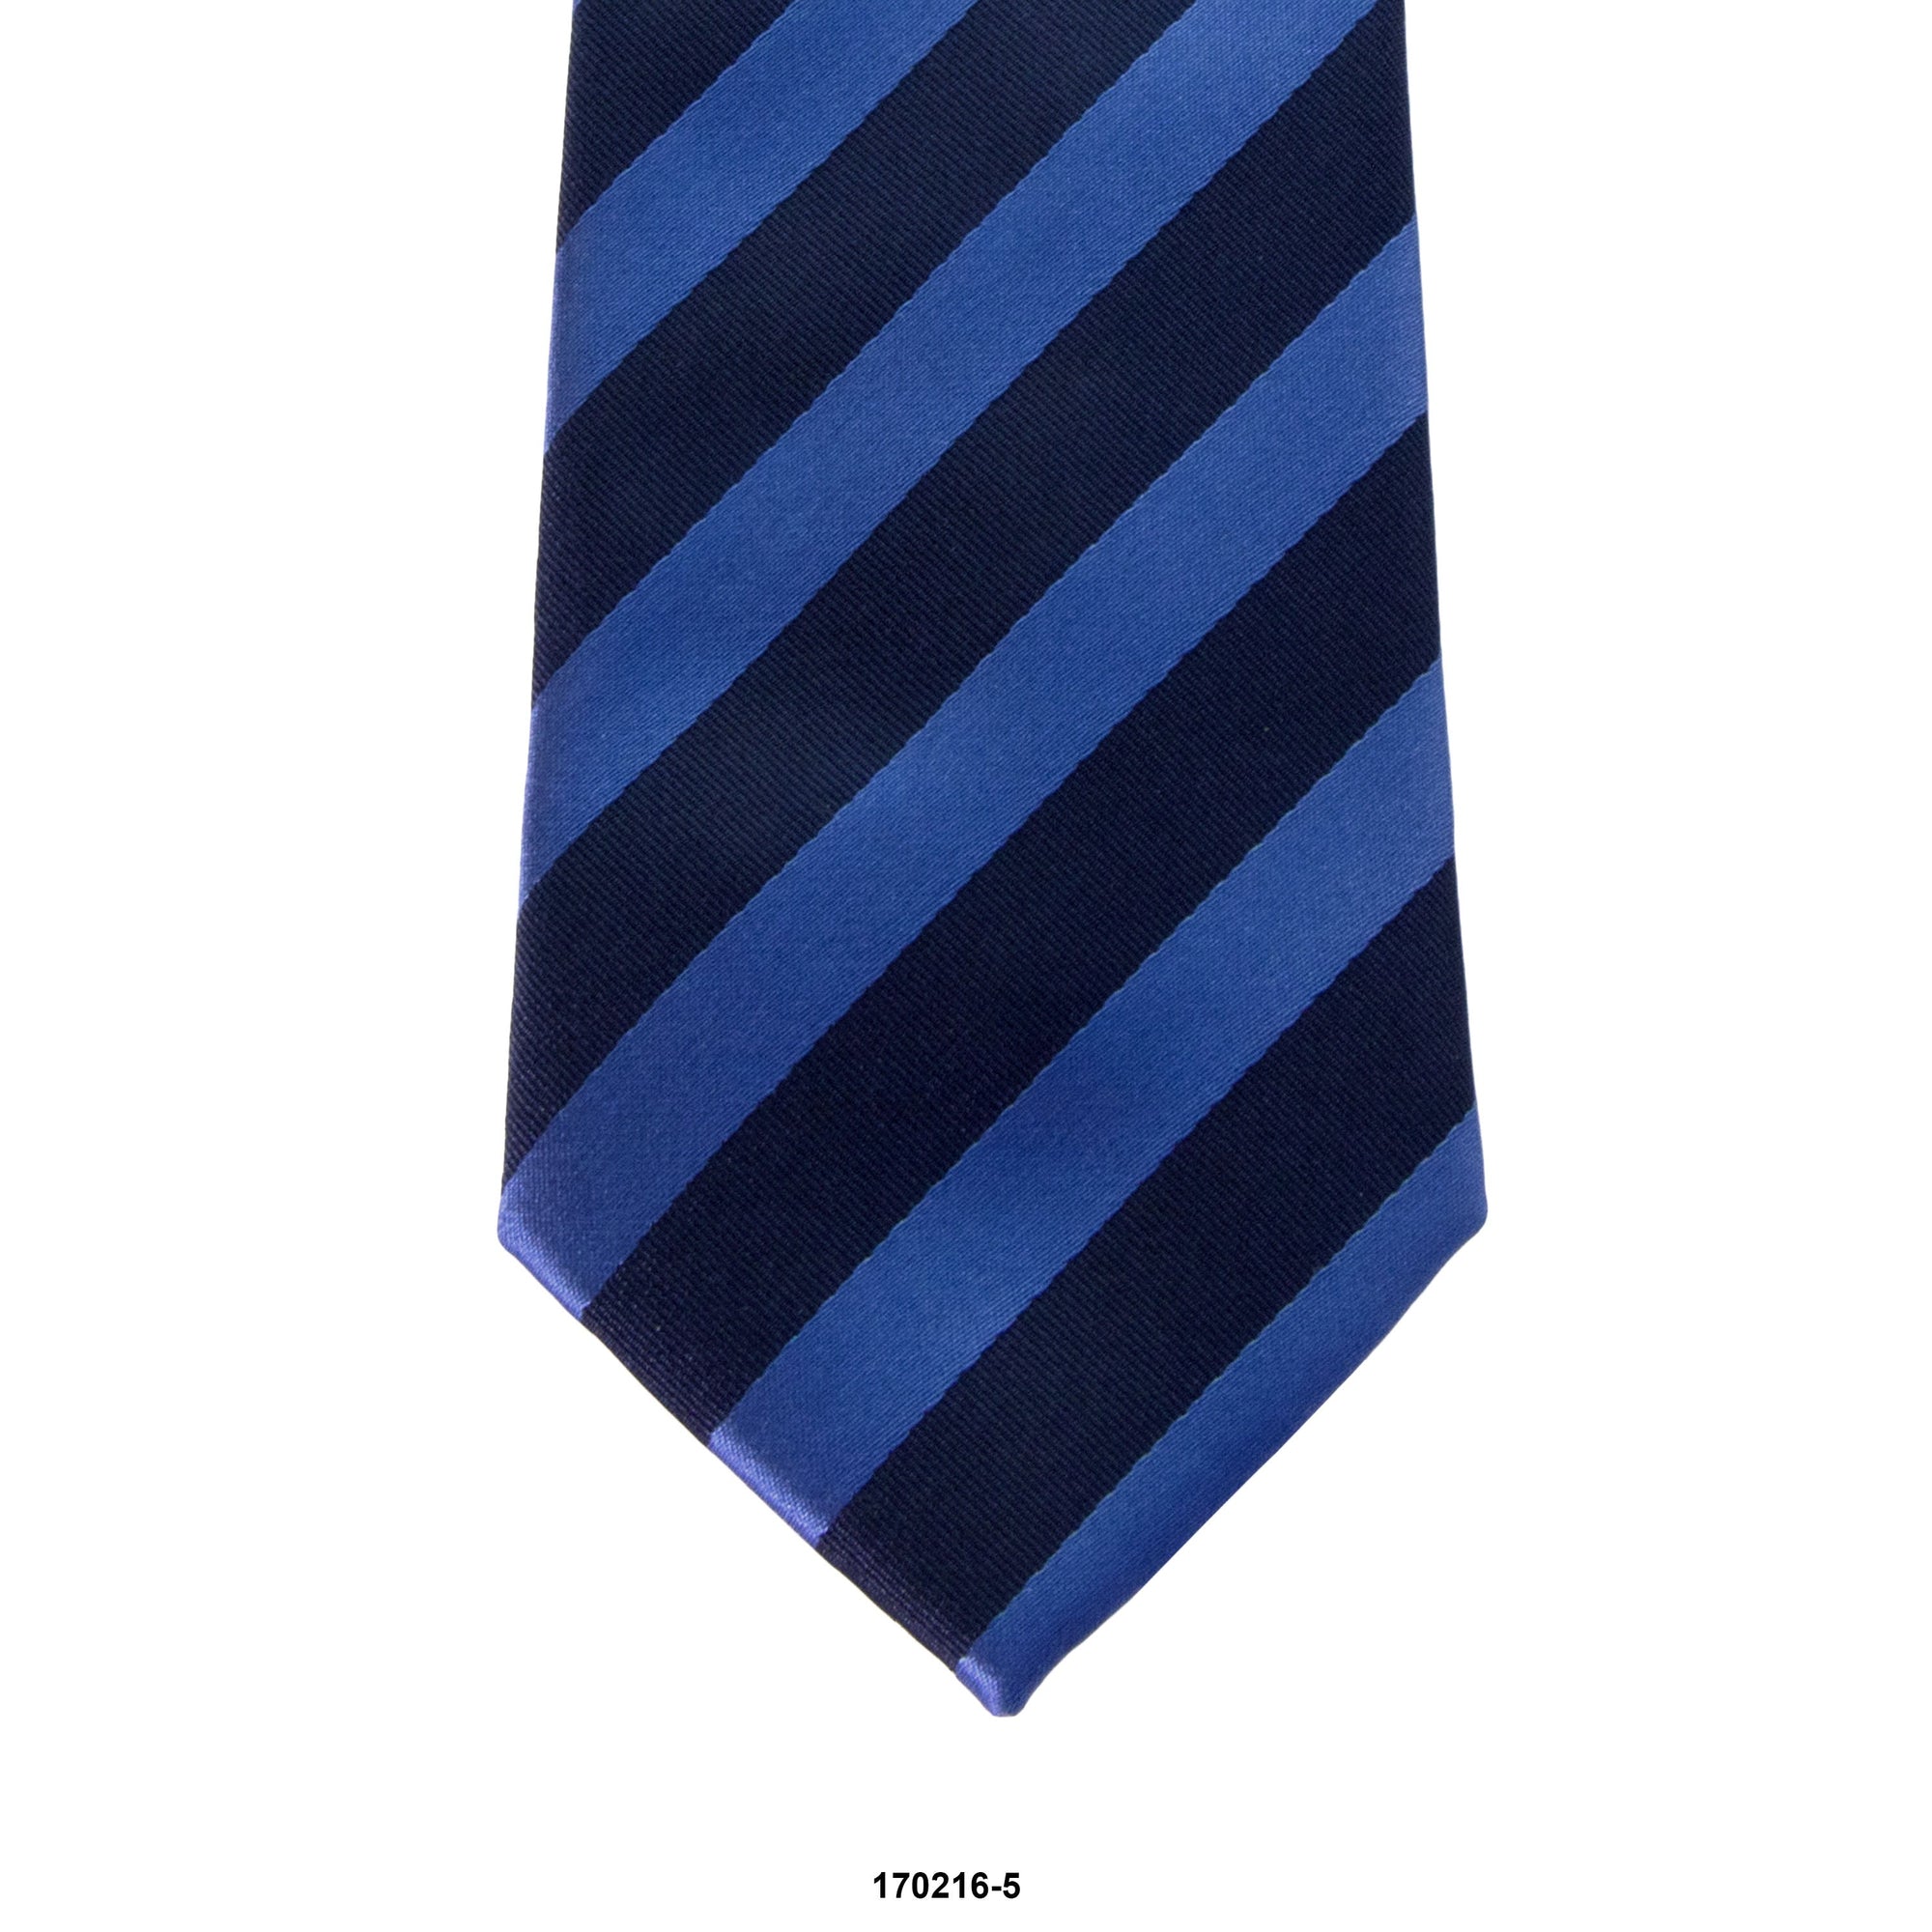 MarZthomson 8cm Stripe Tie in Blue and Navy Blue J-Cufflinks.com.sg | Neckties.com.sg